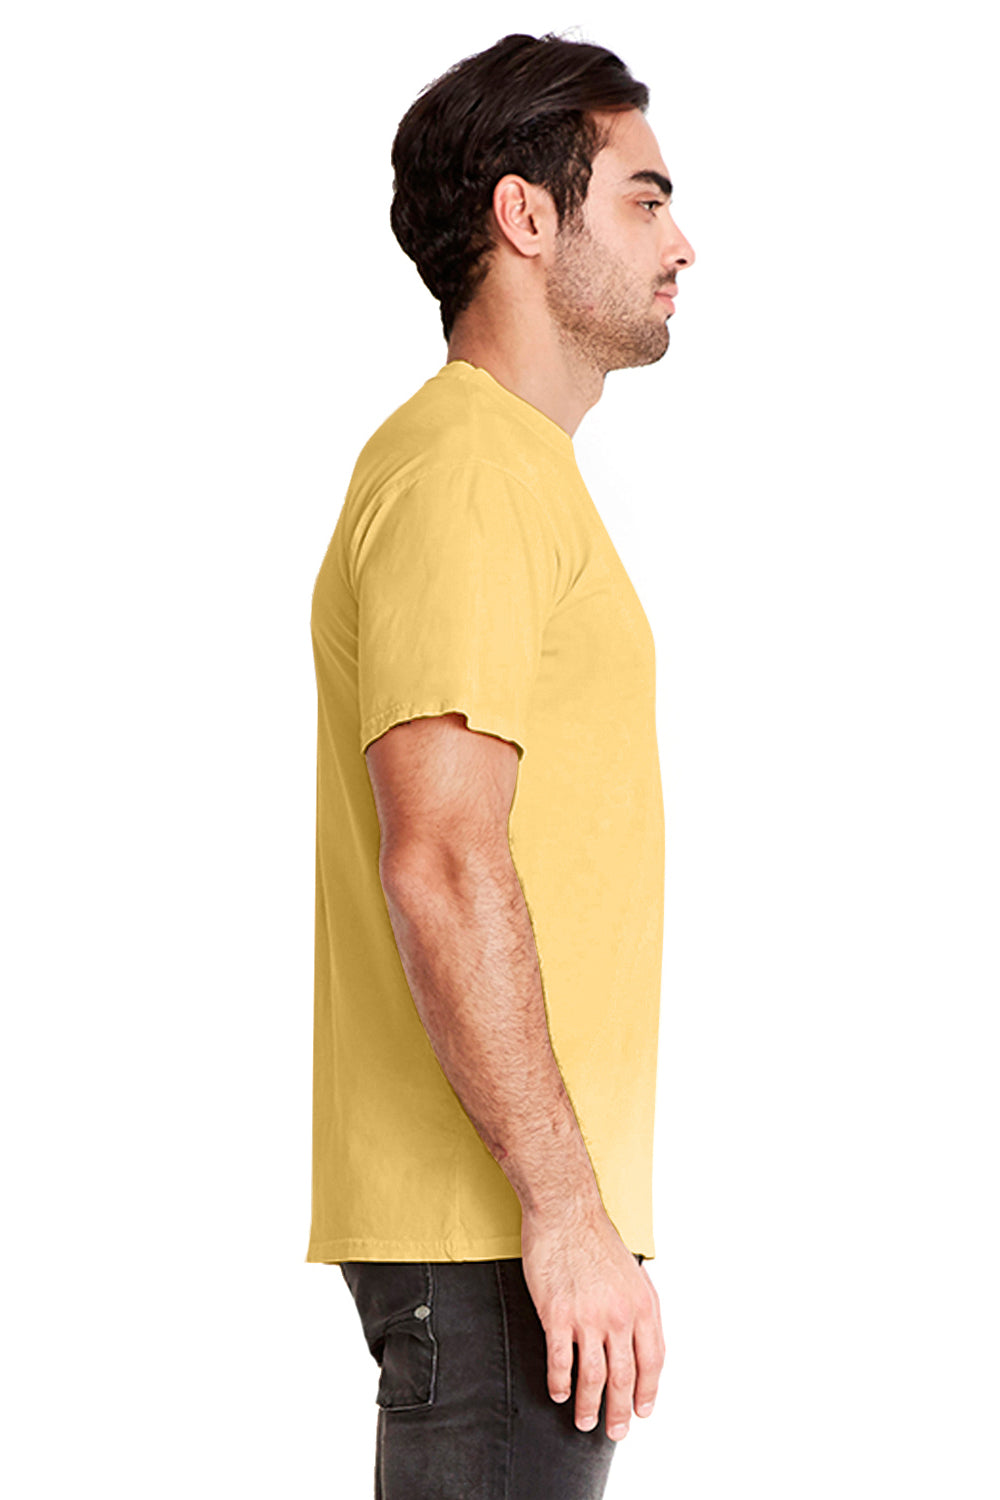 Next Level 7410 Mens Inspired Dye Jersey Short Sleeve Crewneck T-Shirt Blonde Yellow Side